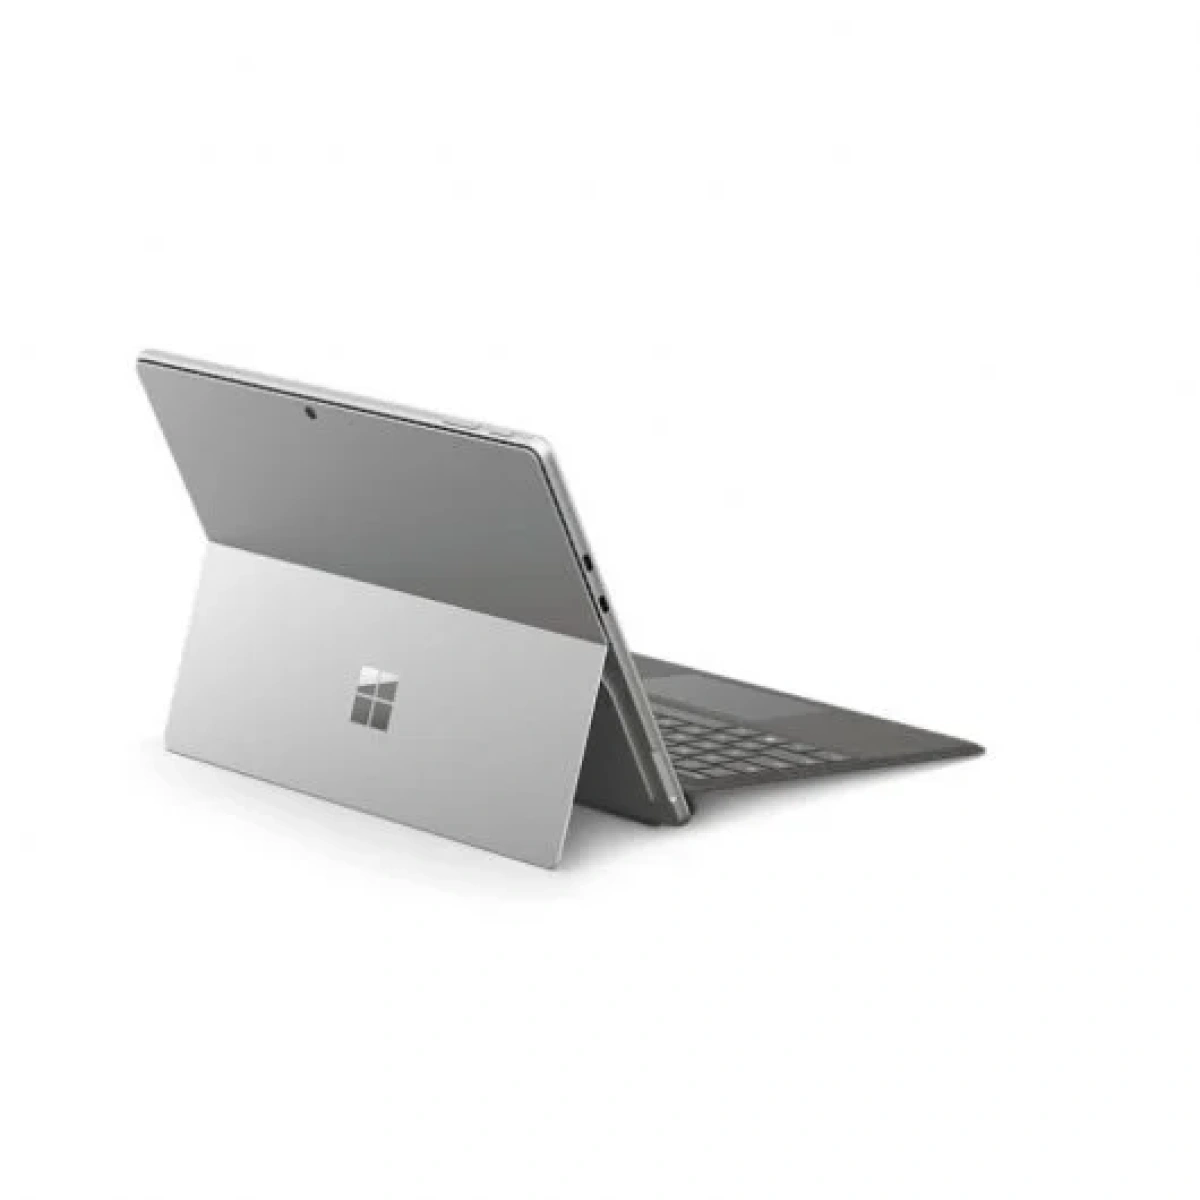 Laptop Microsoft Surface Pro 9 Ci5 8Gb 256Gb Platino 13